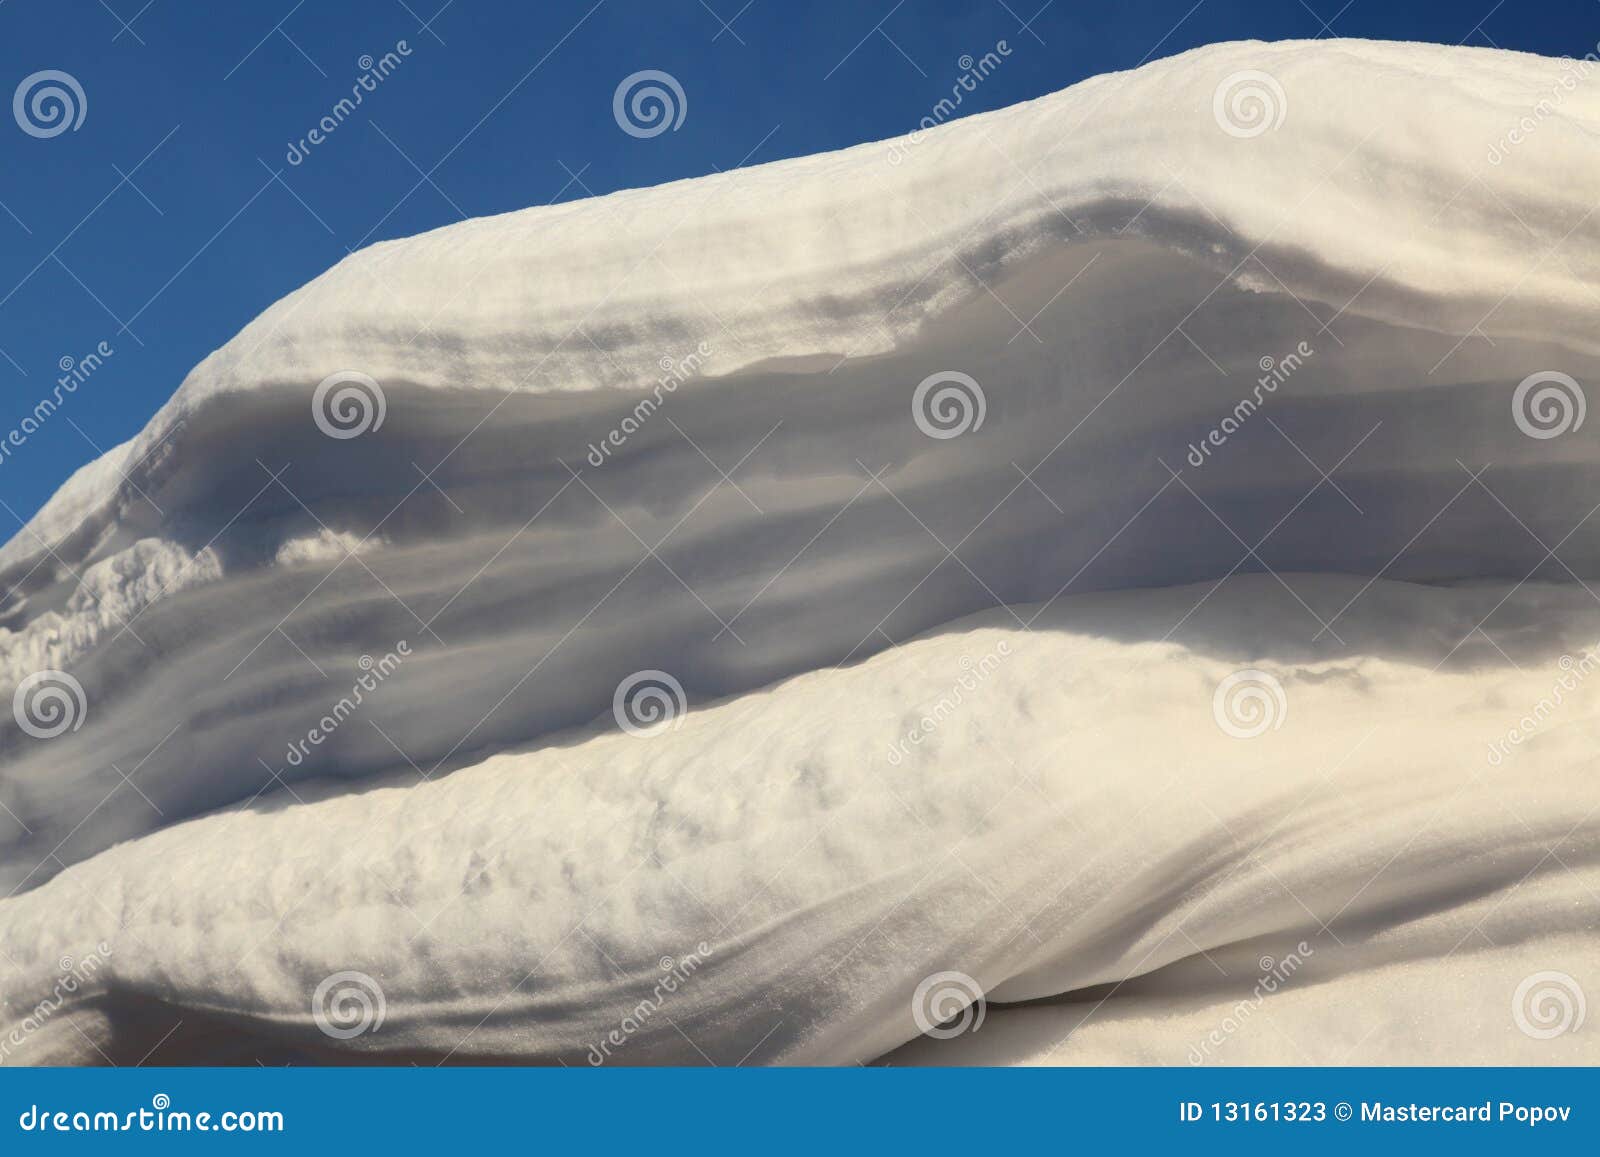 clipart snow drifts - photo #46